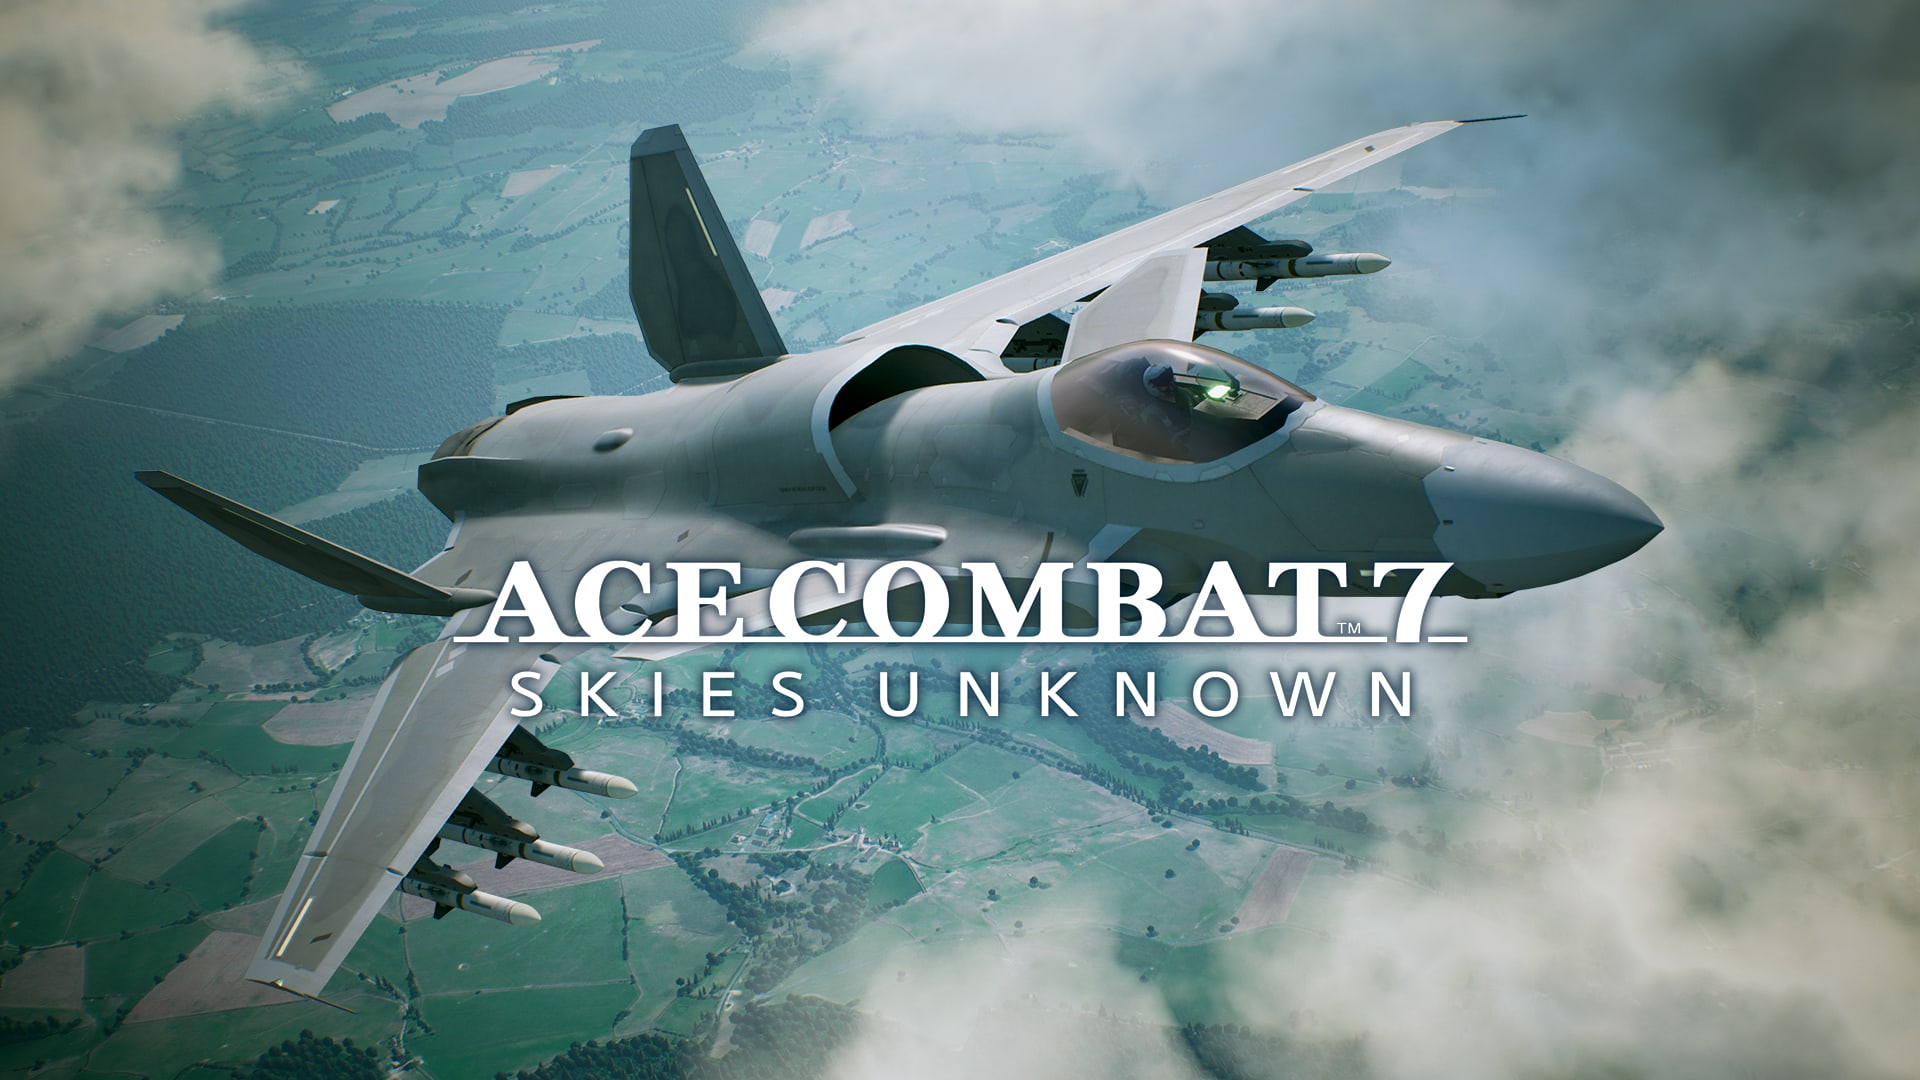 ACE COMBAT™7: SKIES UNKNOWN - Ensemble ASF-X Shinden II